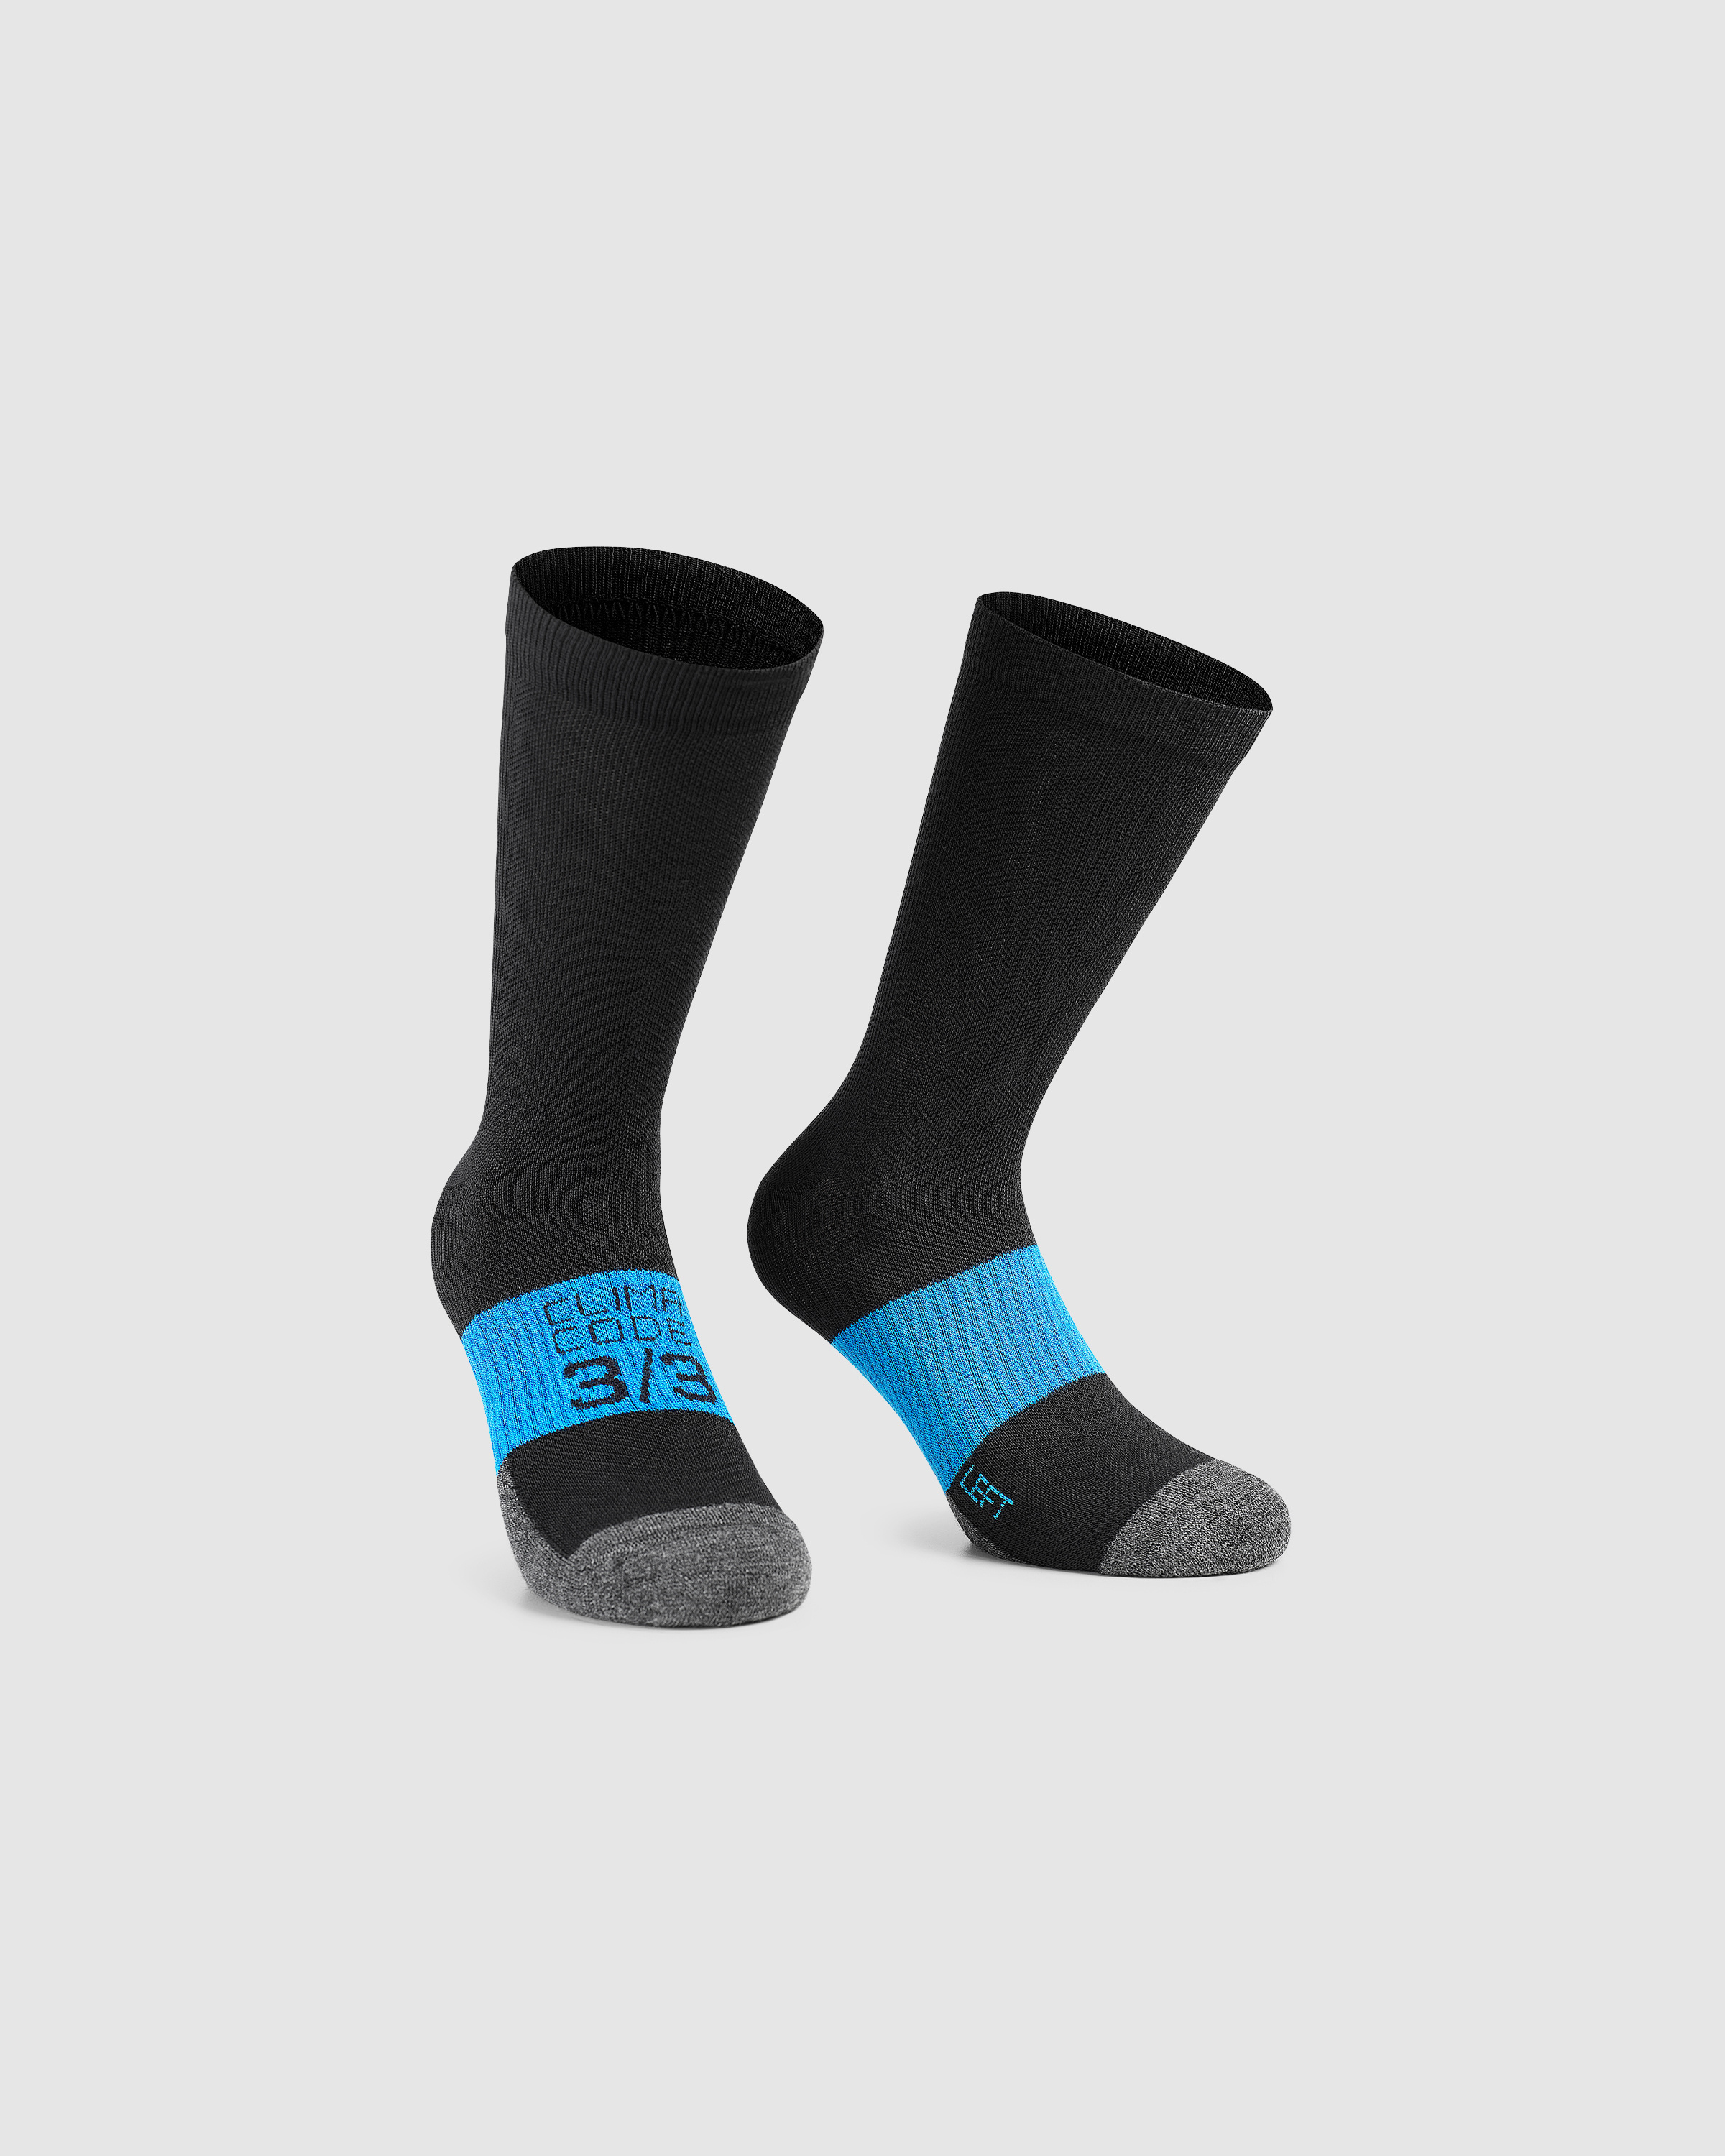 Winter Socks EVO, blackSeries » ASSOS Of Switzerland